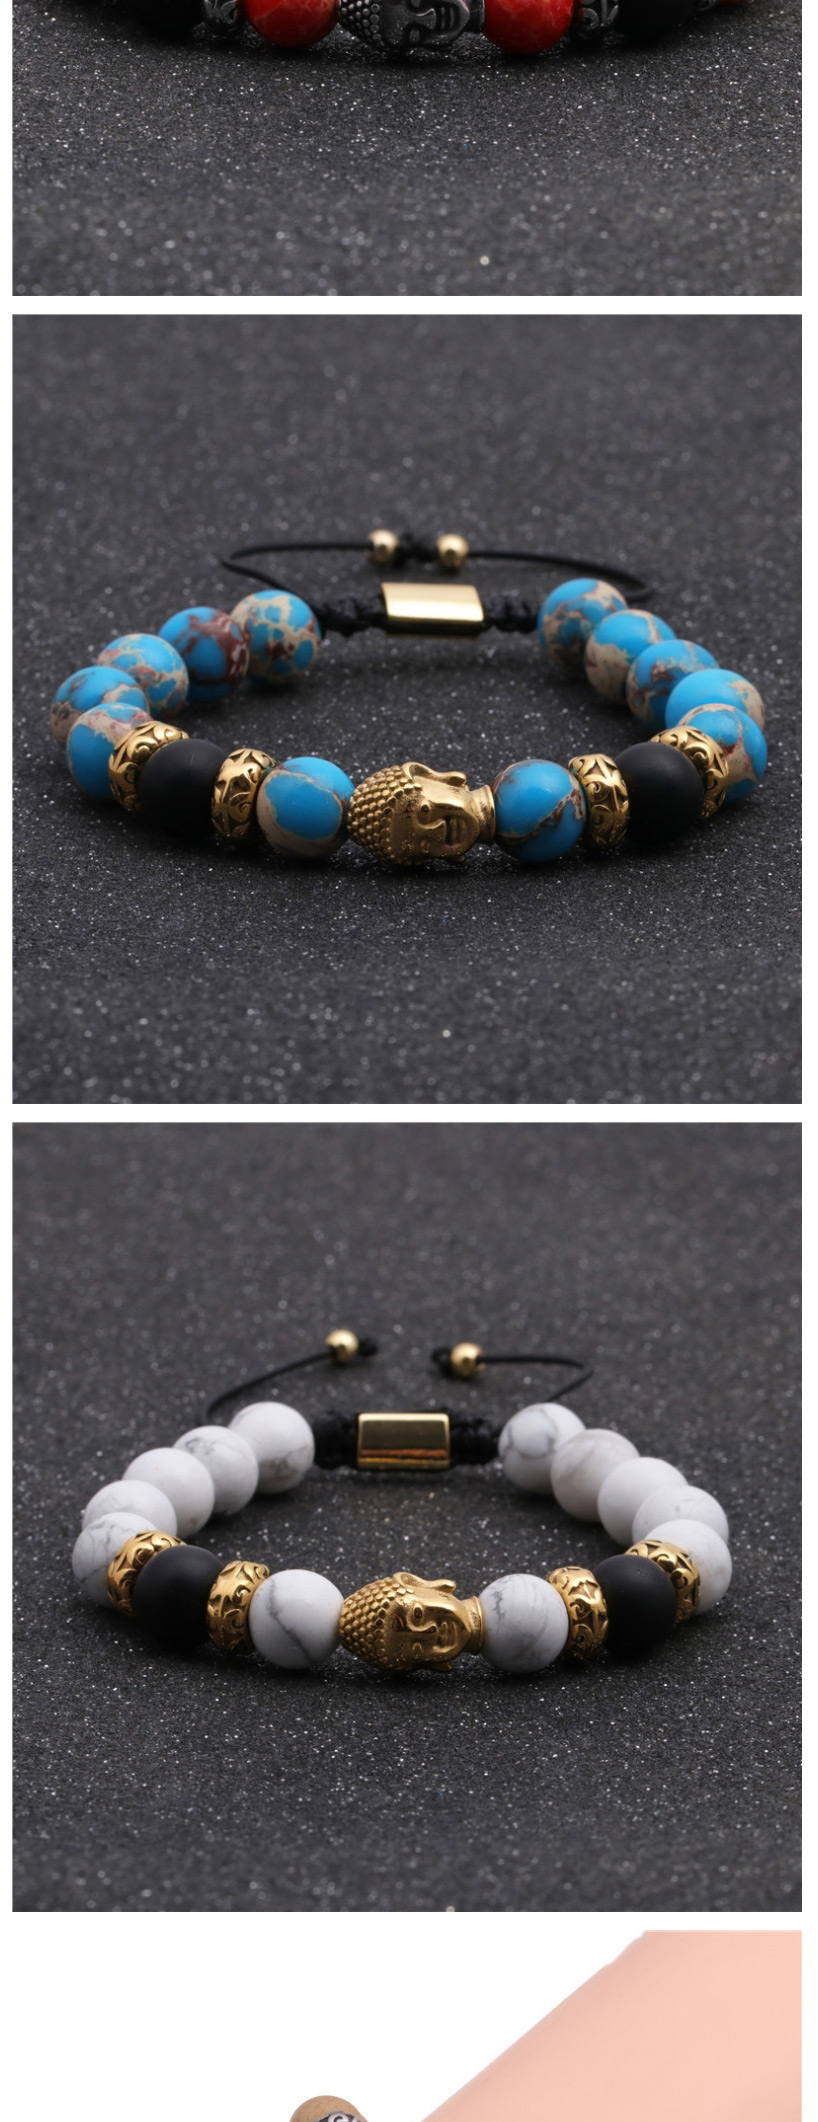 Fashion Steel Color Blue Turquoise Stainless Steel Woven Adjustable Buddha Head Bracelet For Men,Bracelets